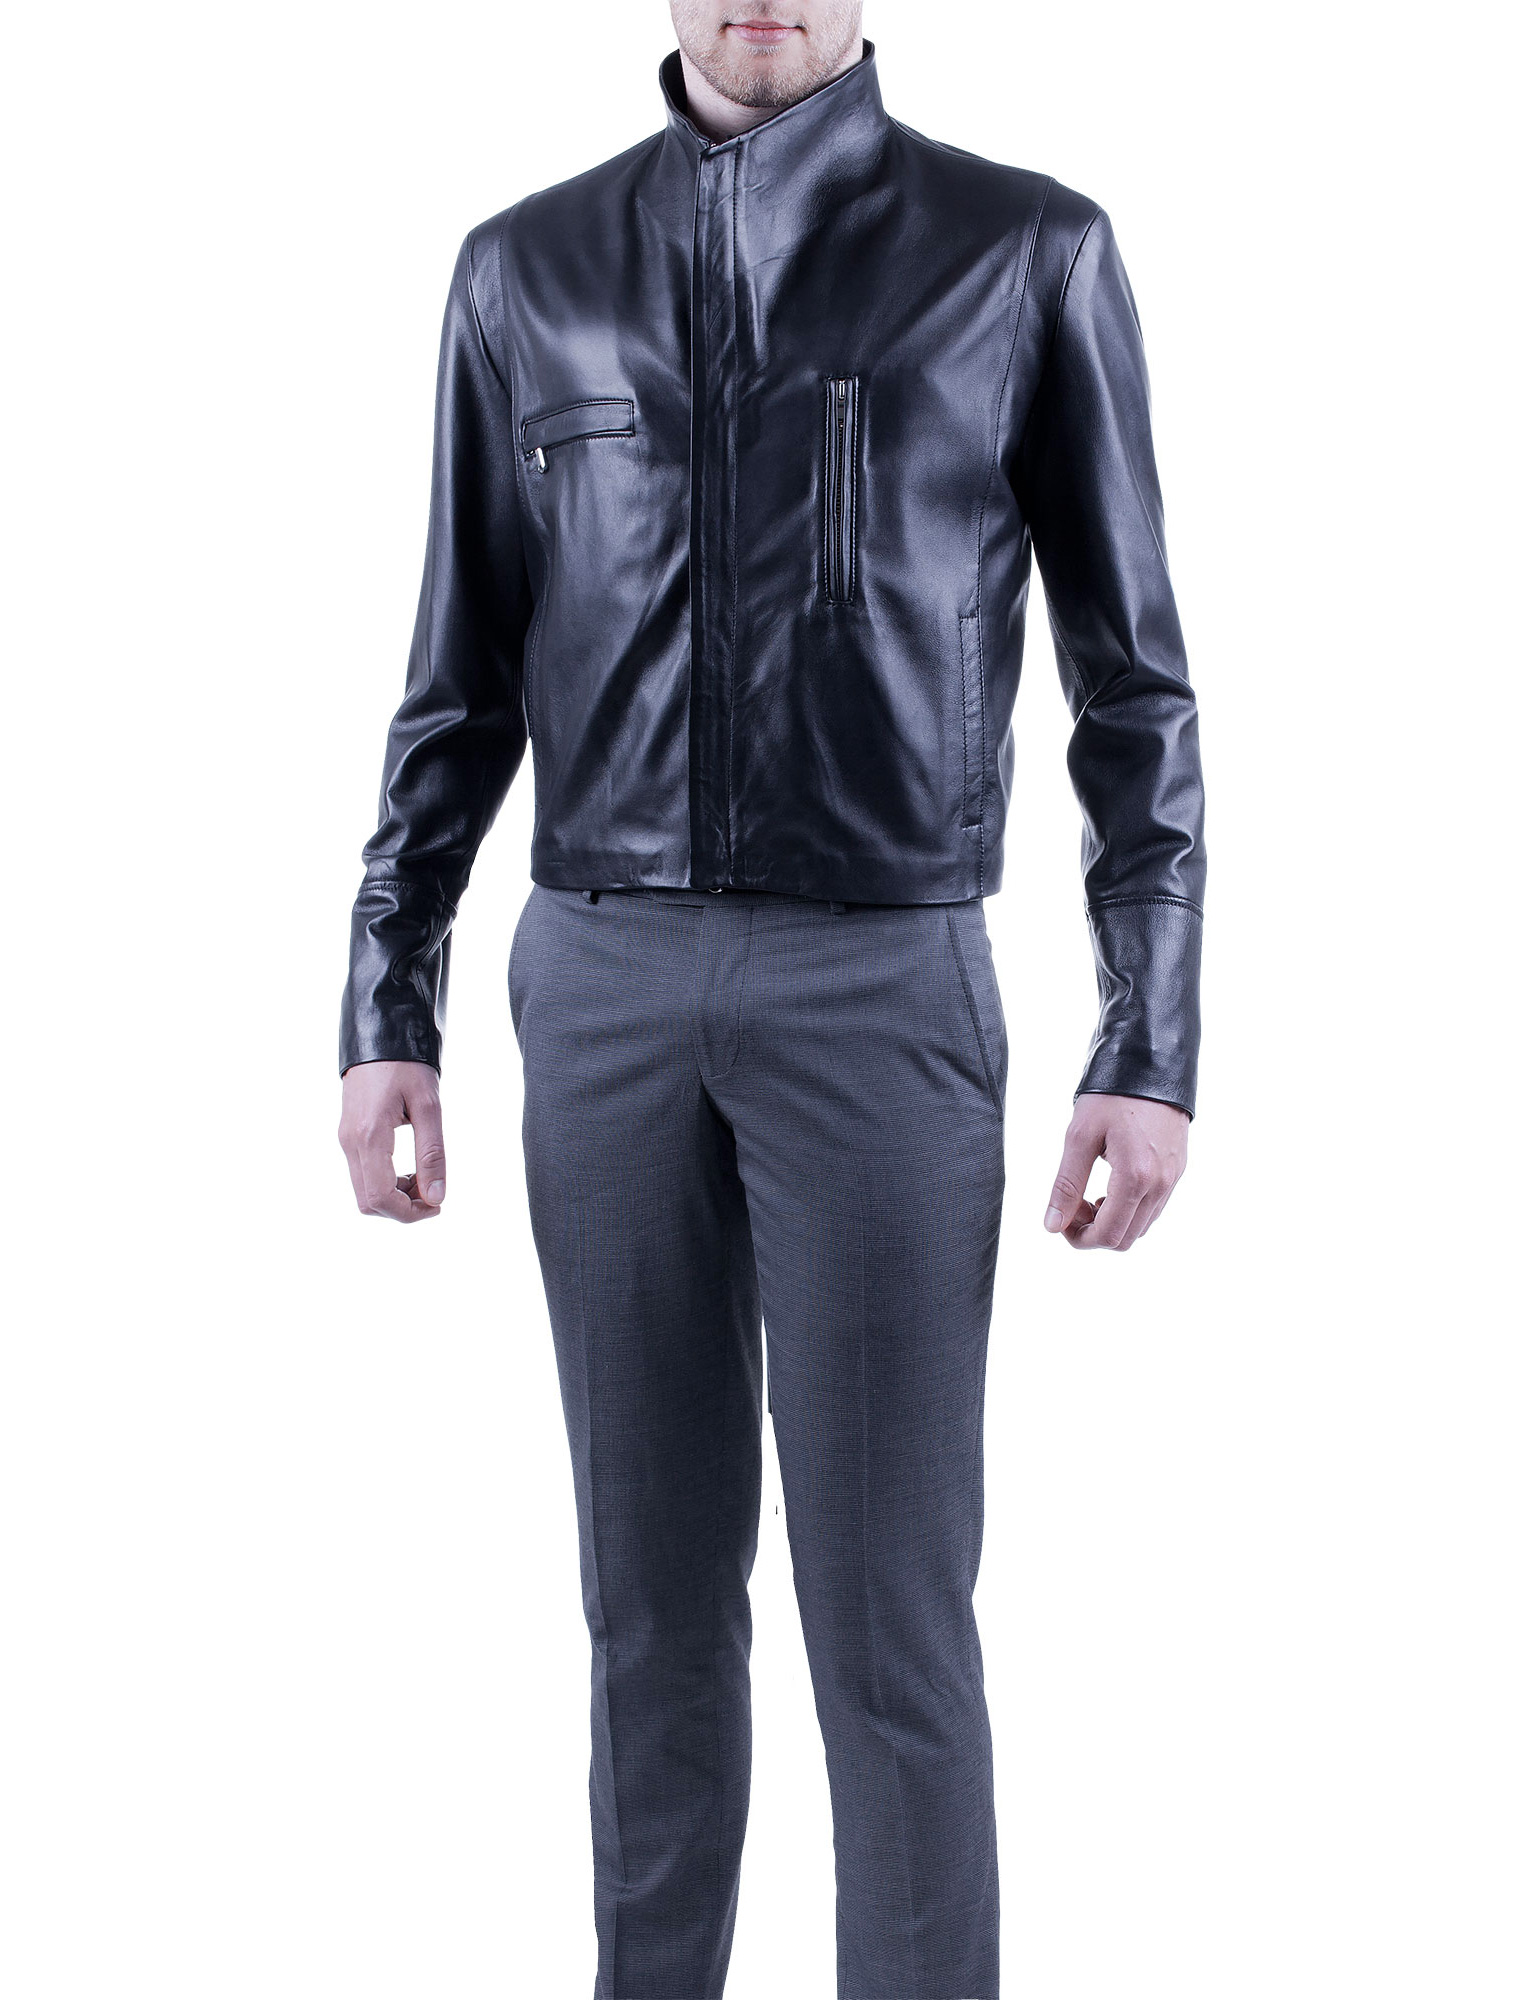 Spaziale Leather Jacket Janni Derma, Italian Aniline Leather